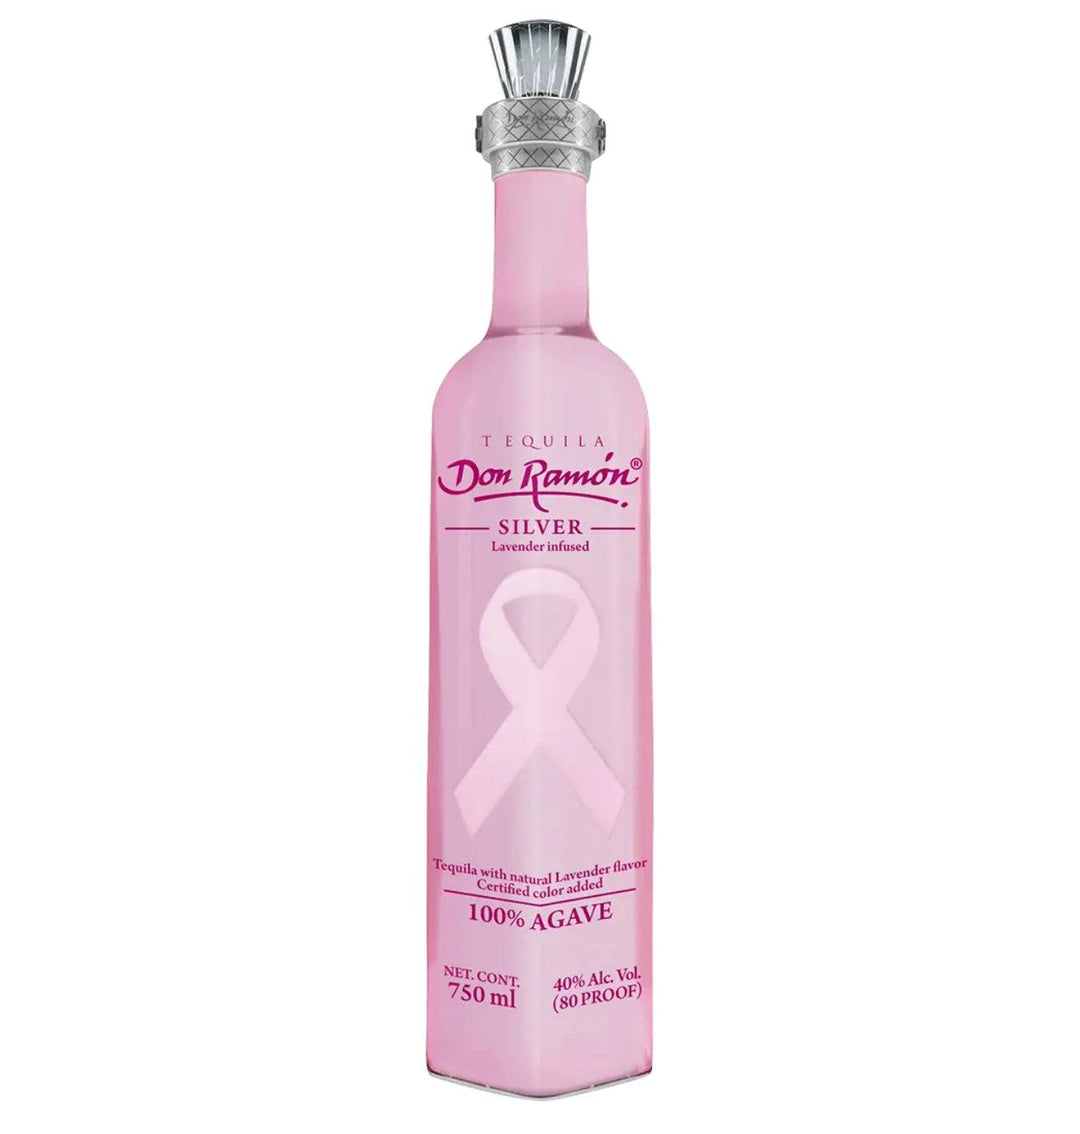 Don Ramon Tequila Cancer Awareness Bottle - Liquor Luxe